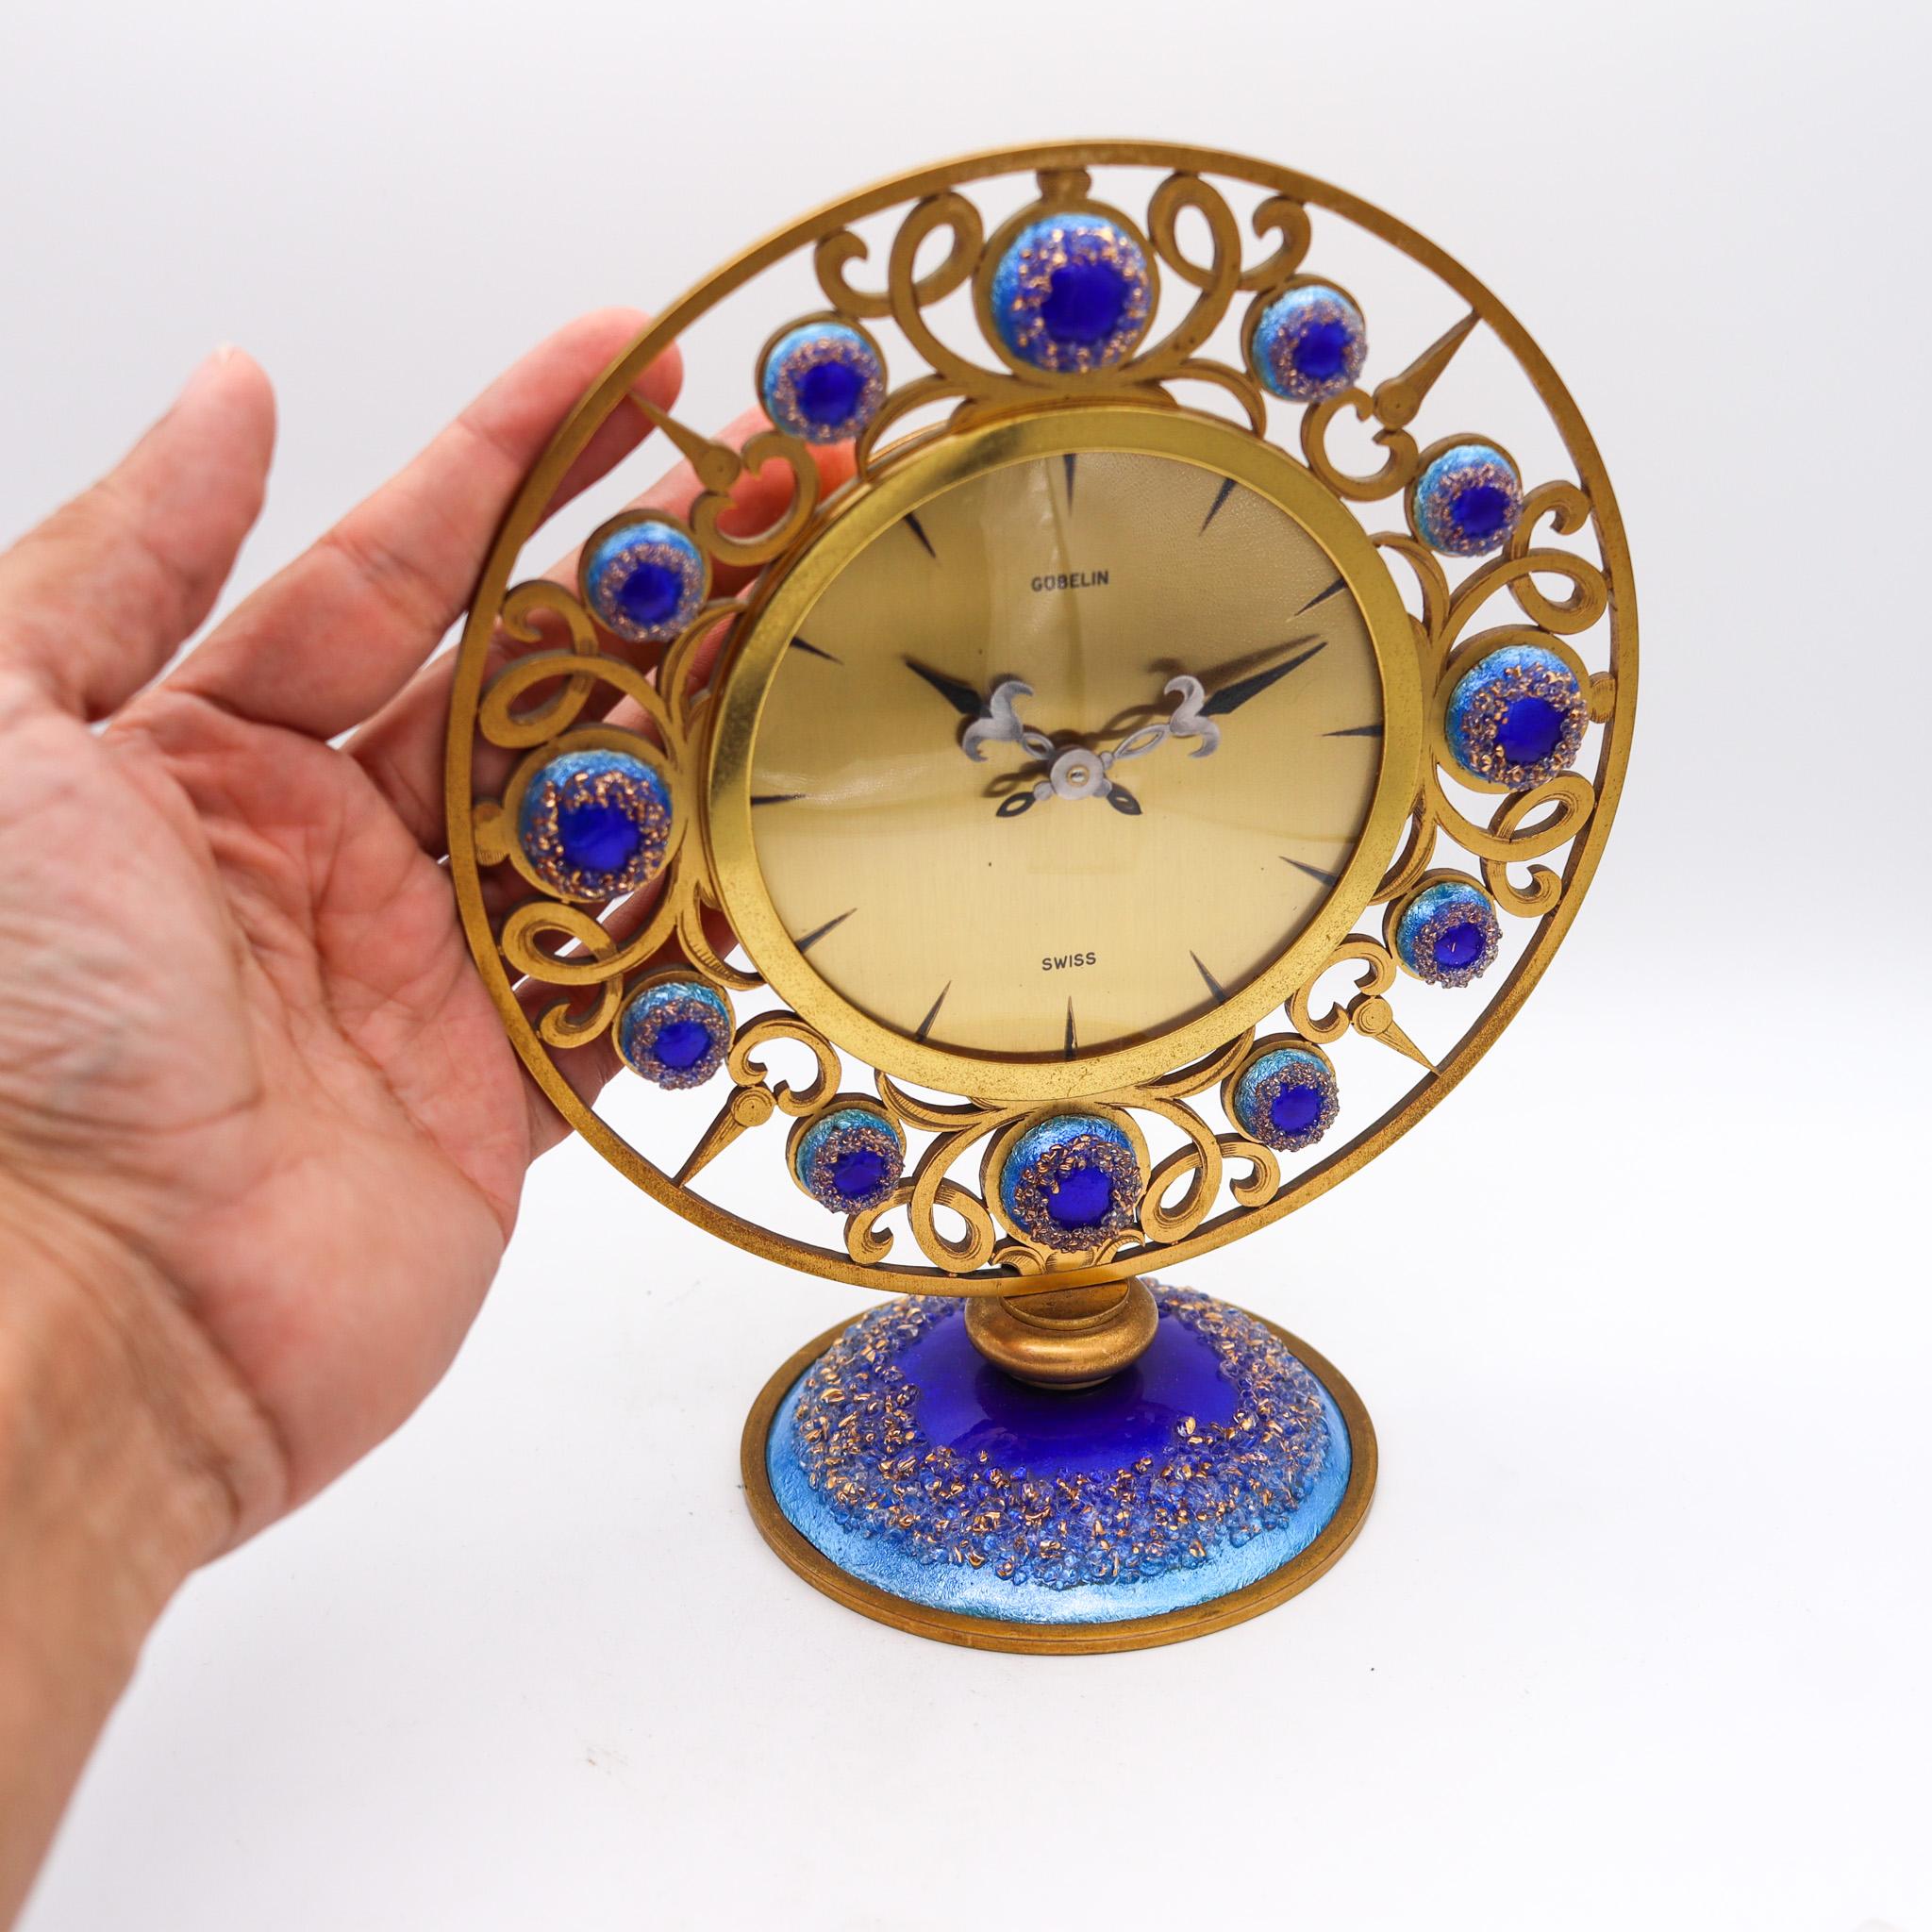 Gubelin Swiss 1960 Retro Modernist 8 Days Desk Clock in Gilded Bronze and Enamel For Sale 2